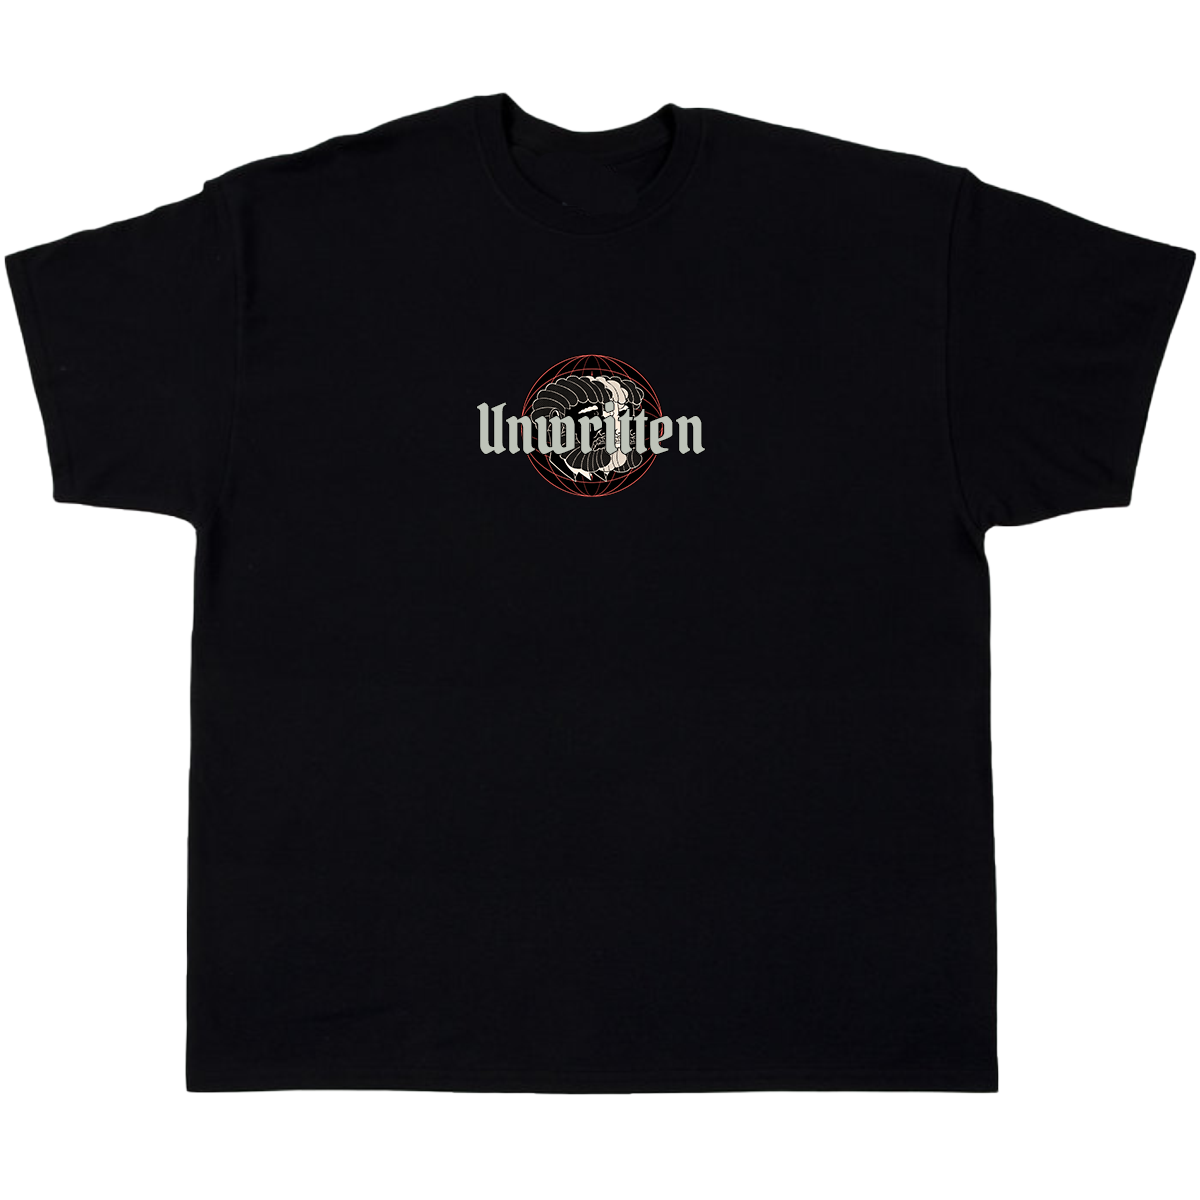 Shirts – The Unwritten Brand